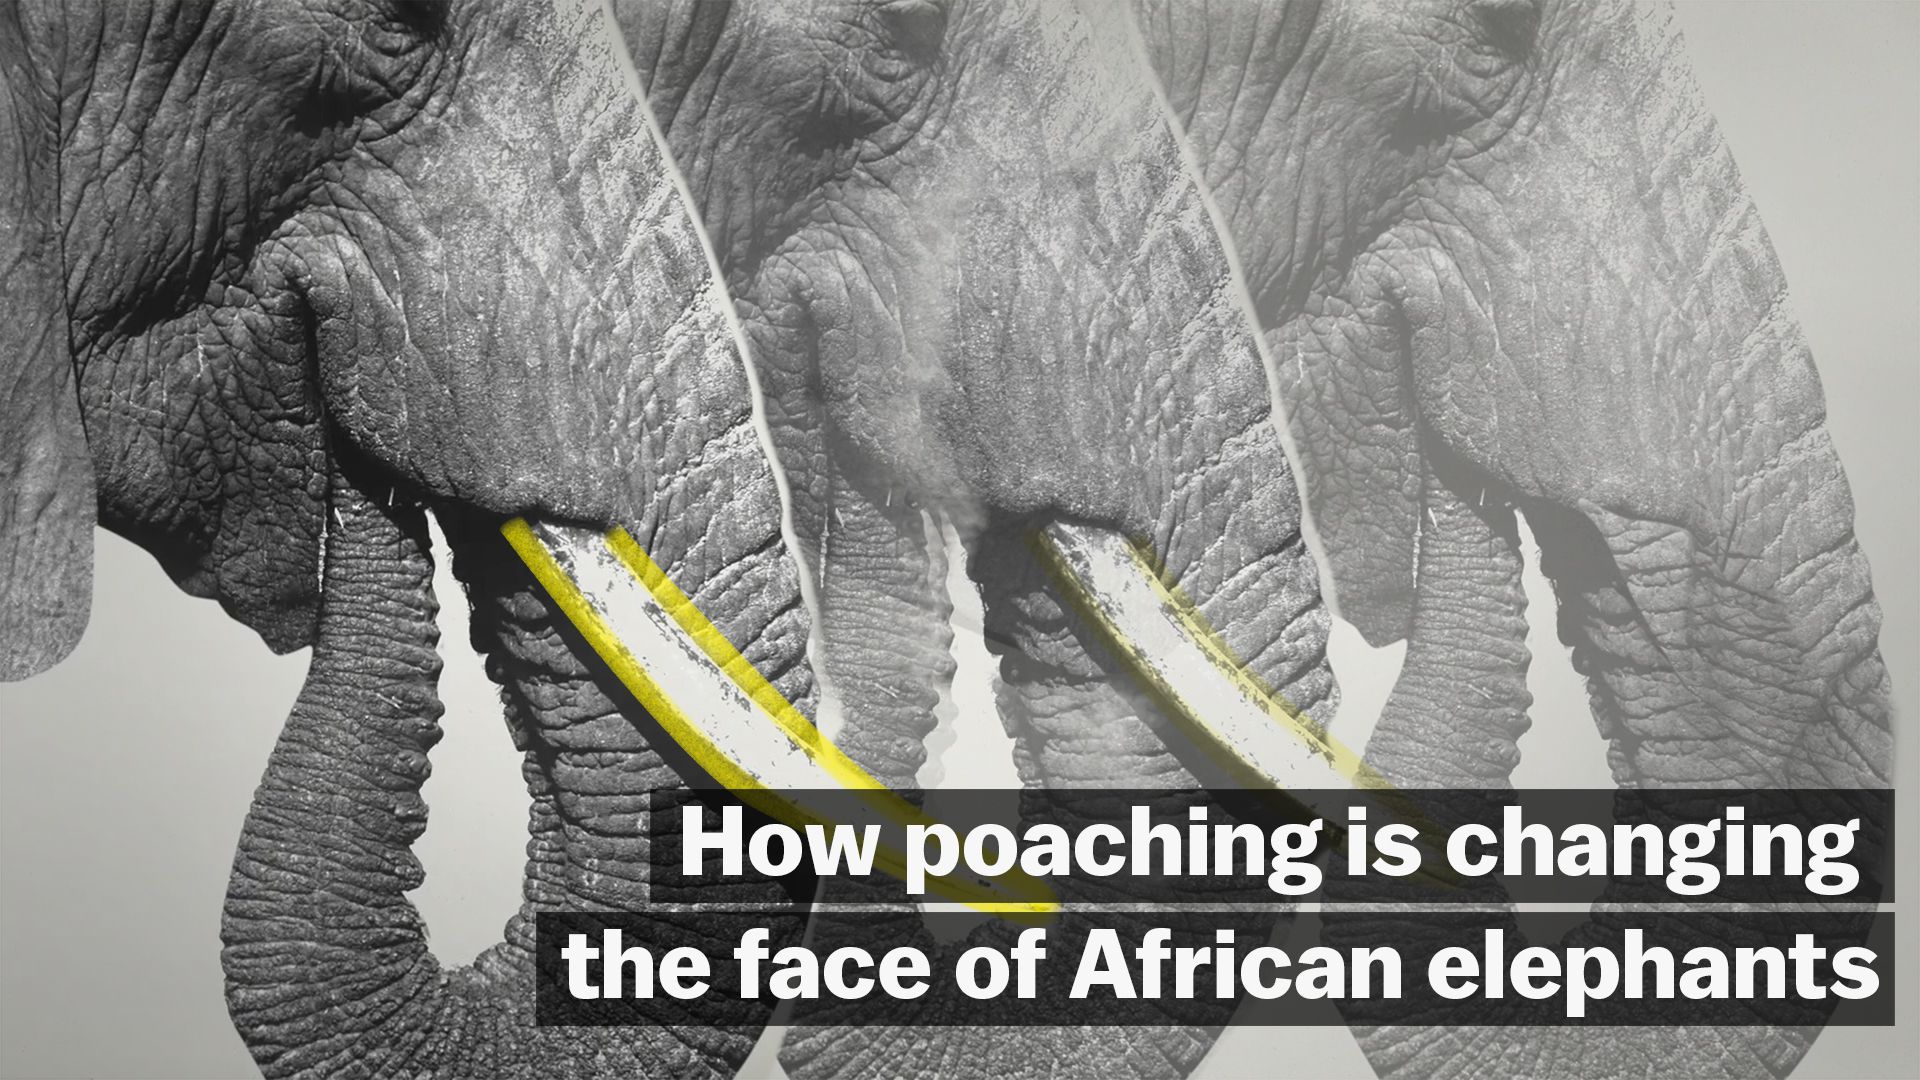 why did elephants evolve